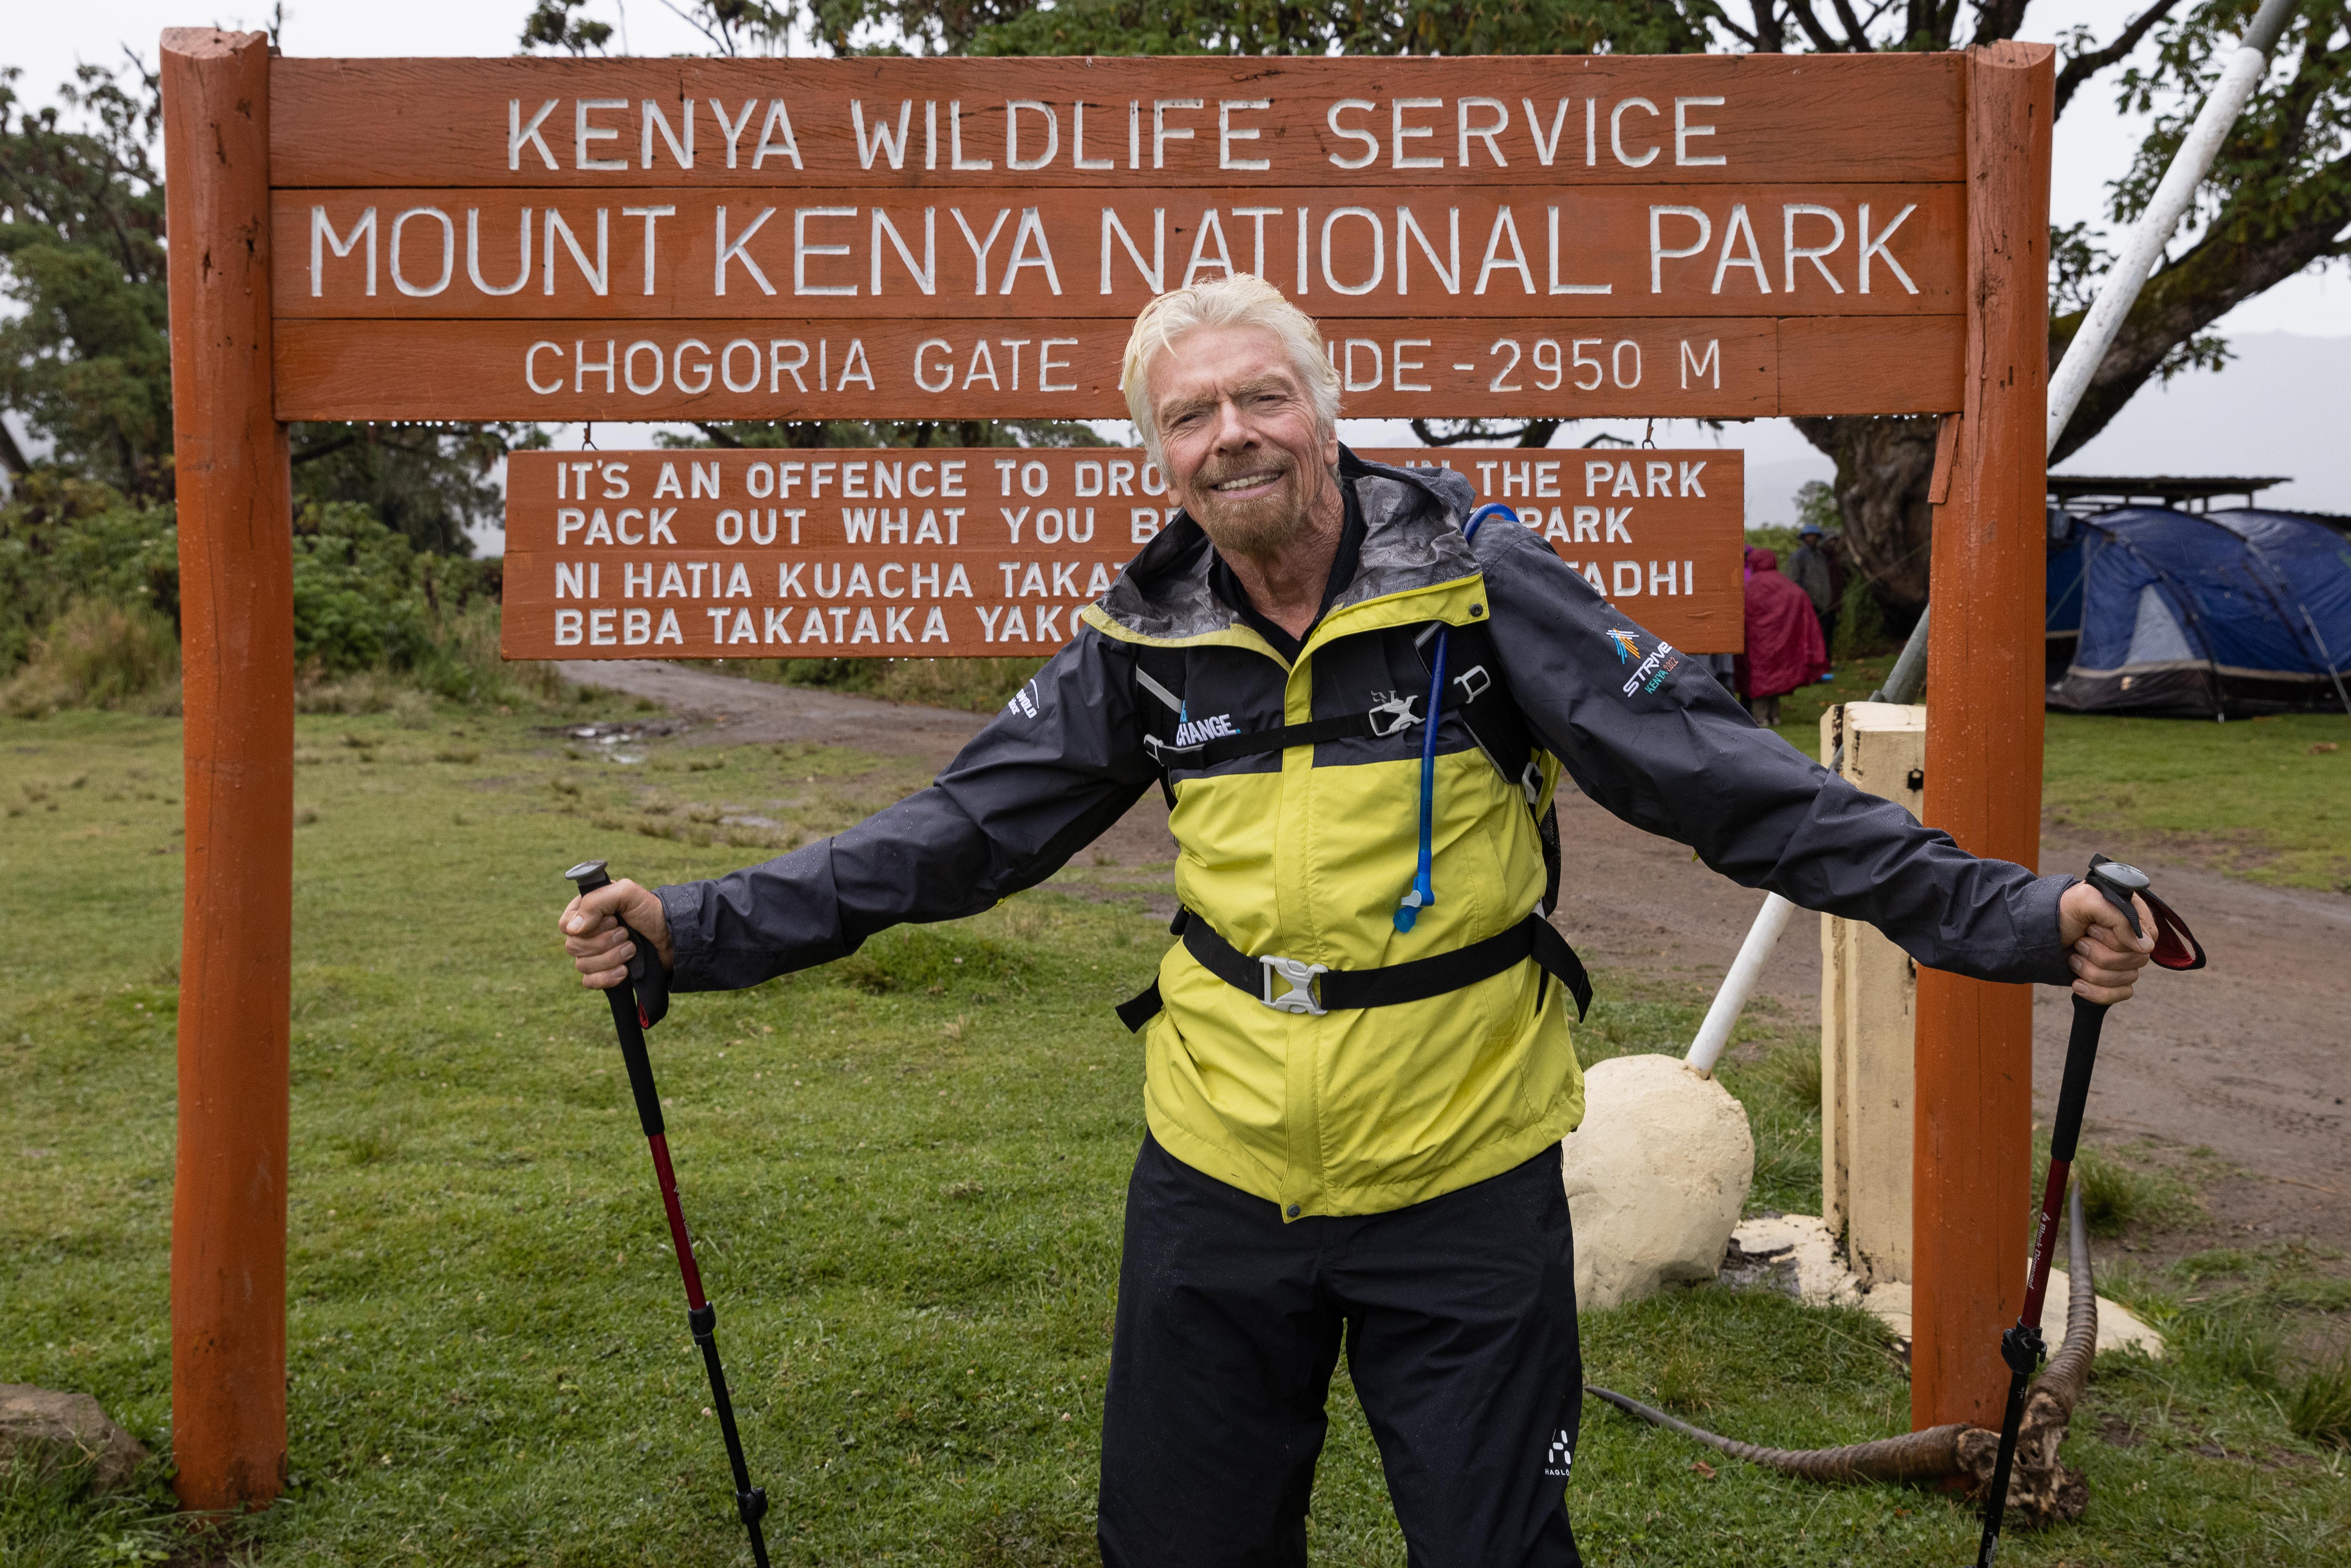 Richard Branson smiling on the Strive Challenge in Kenya